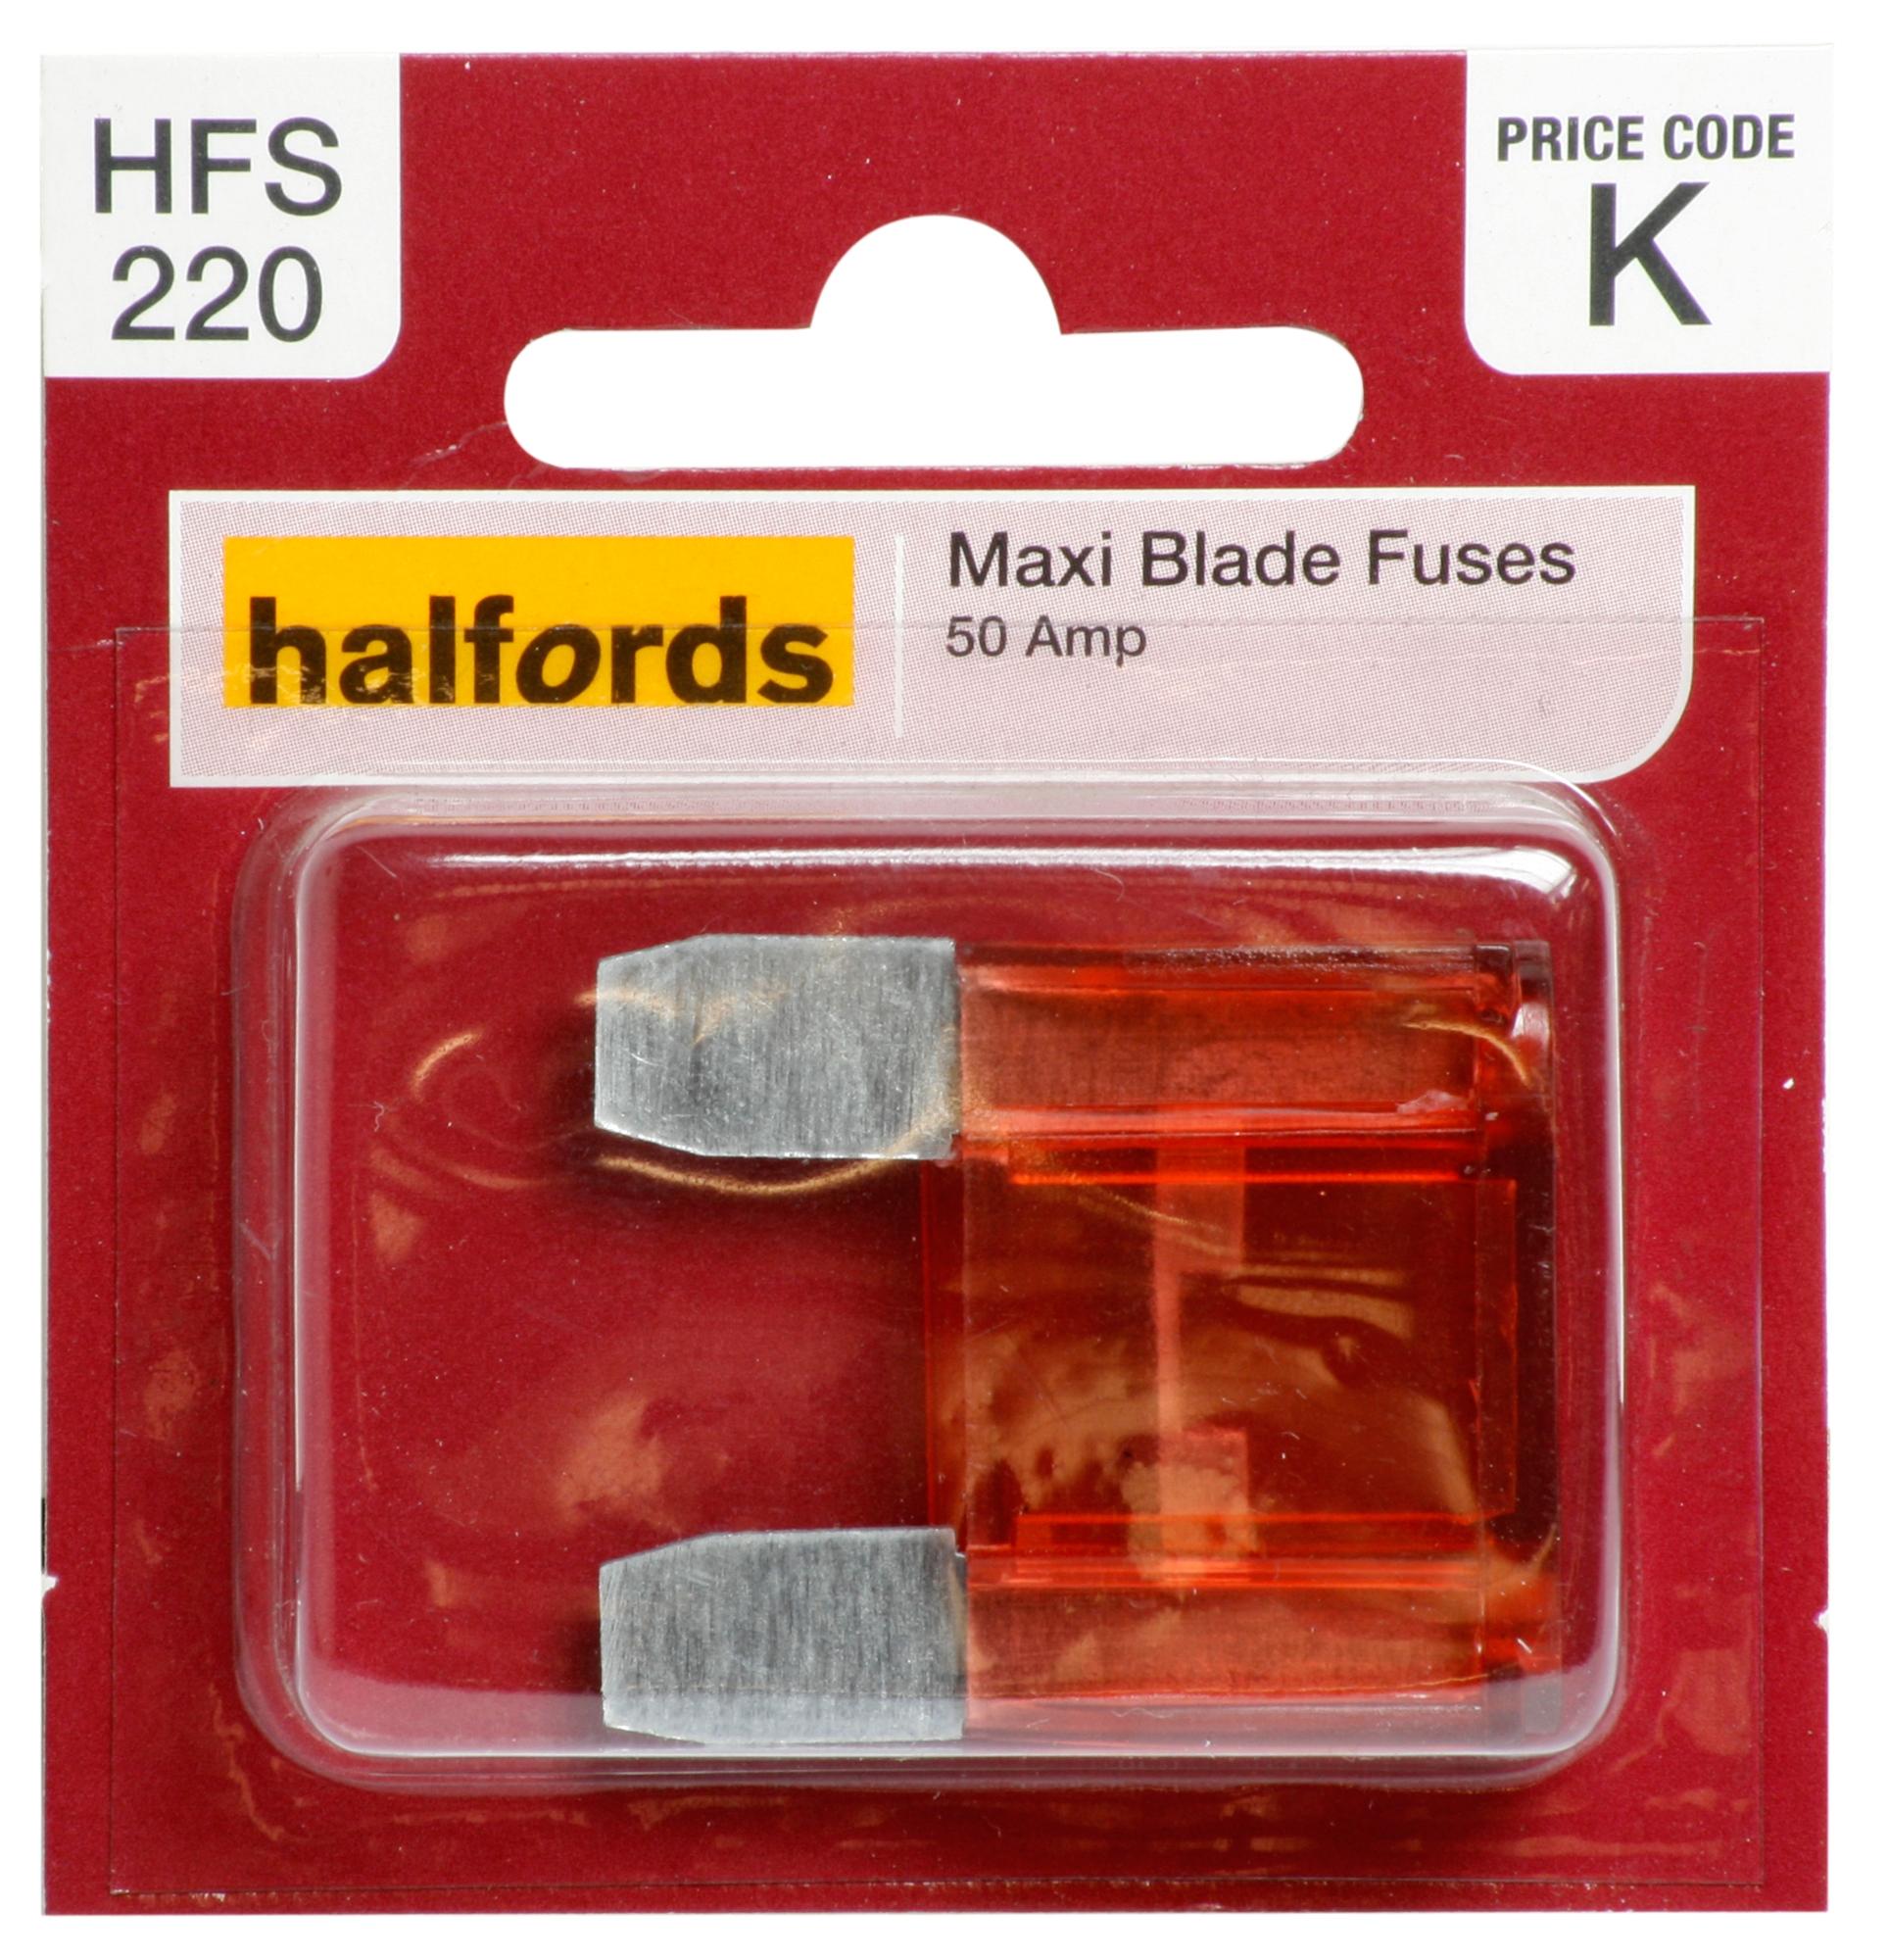 Halfords Maxi Blade Fuse 50 Amp (Hfs220)